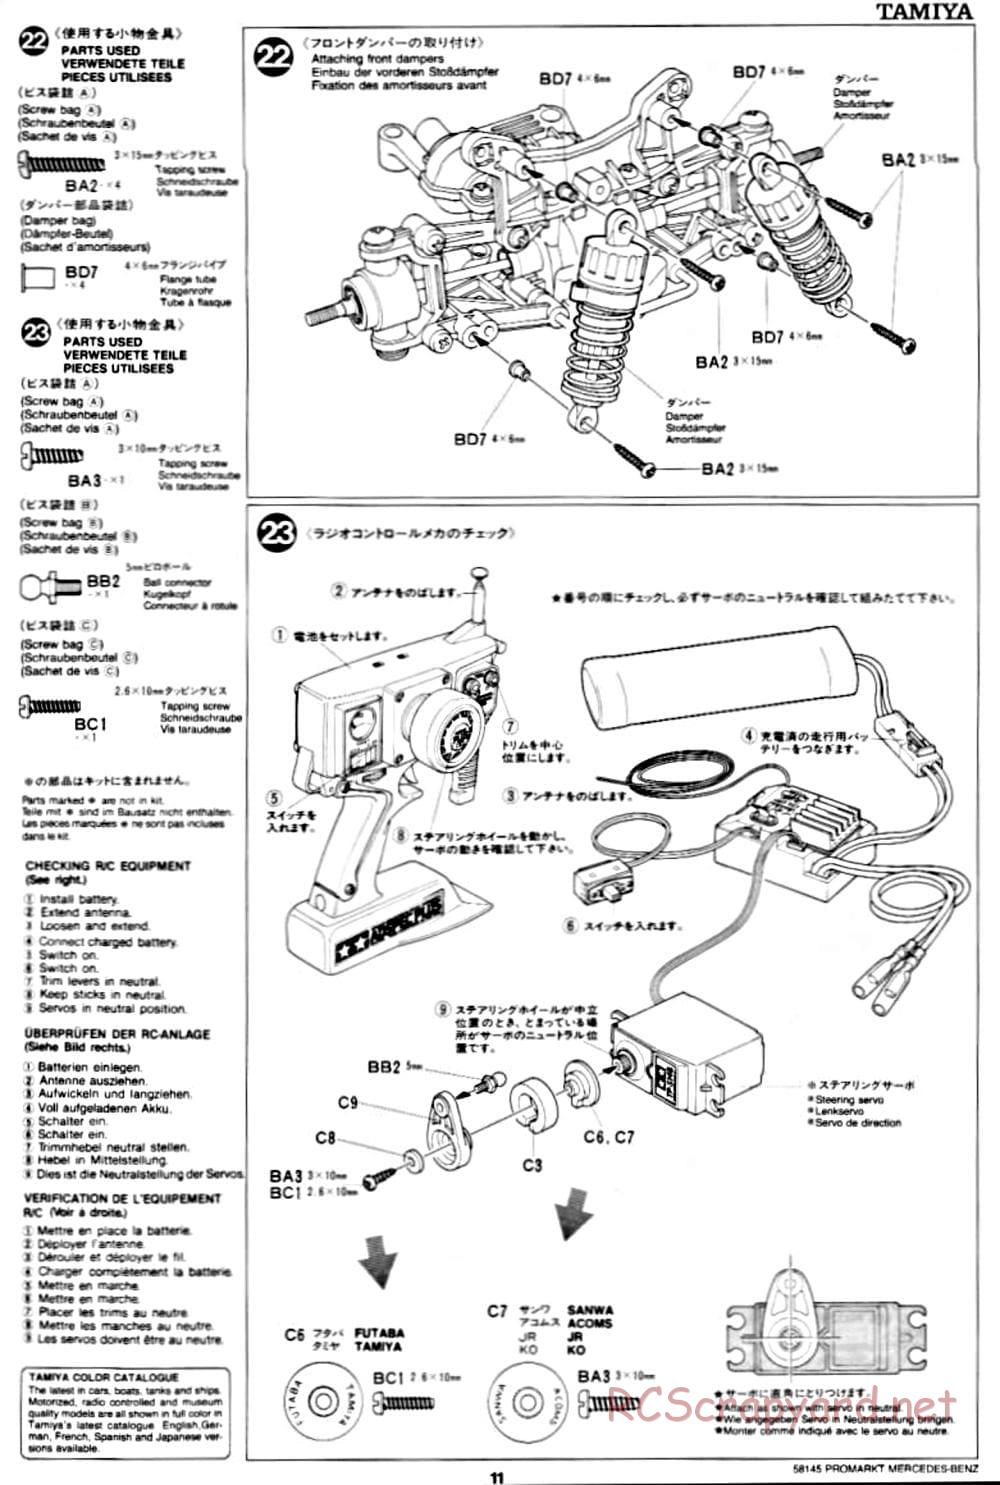 Tamiya - ProMarkt-Zakspeed AMG Mercedes C-Class DTM - TA-02 Chassis - Manual - Page 11